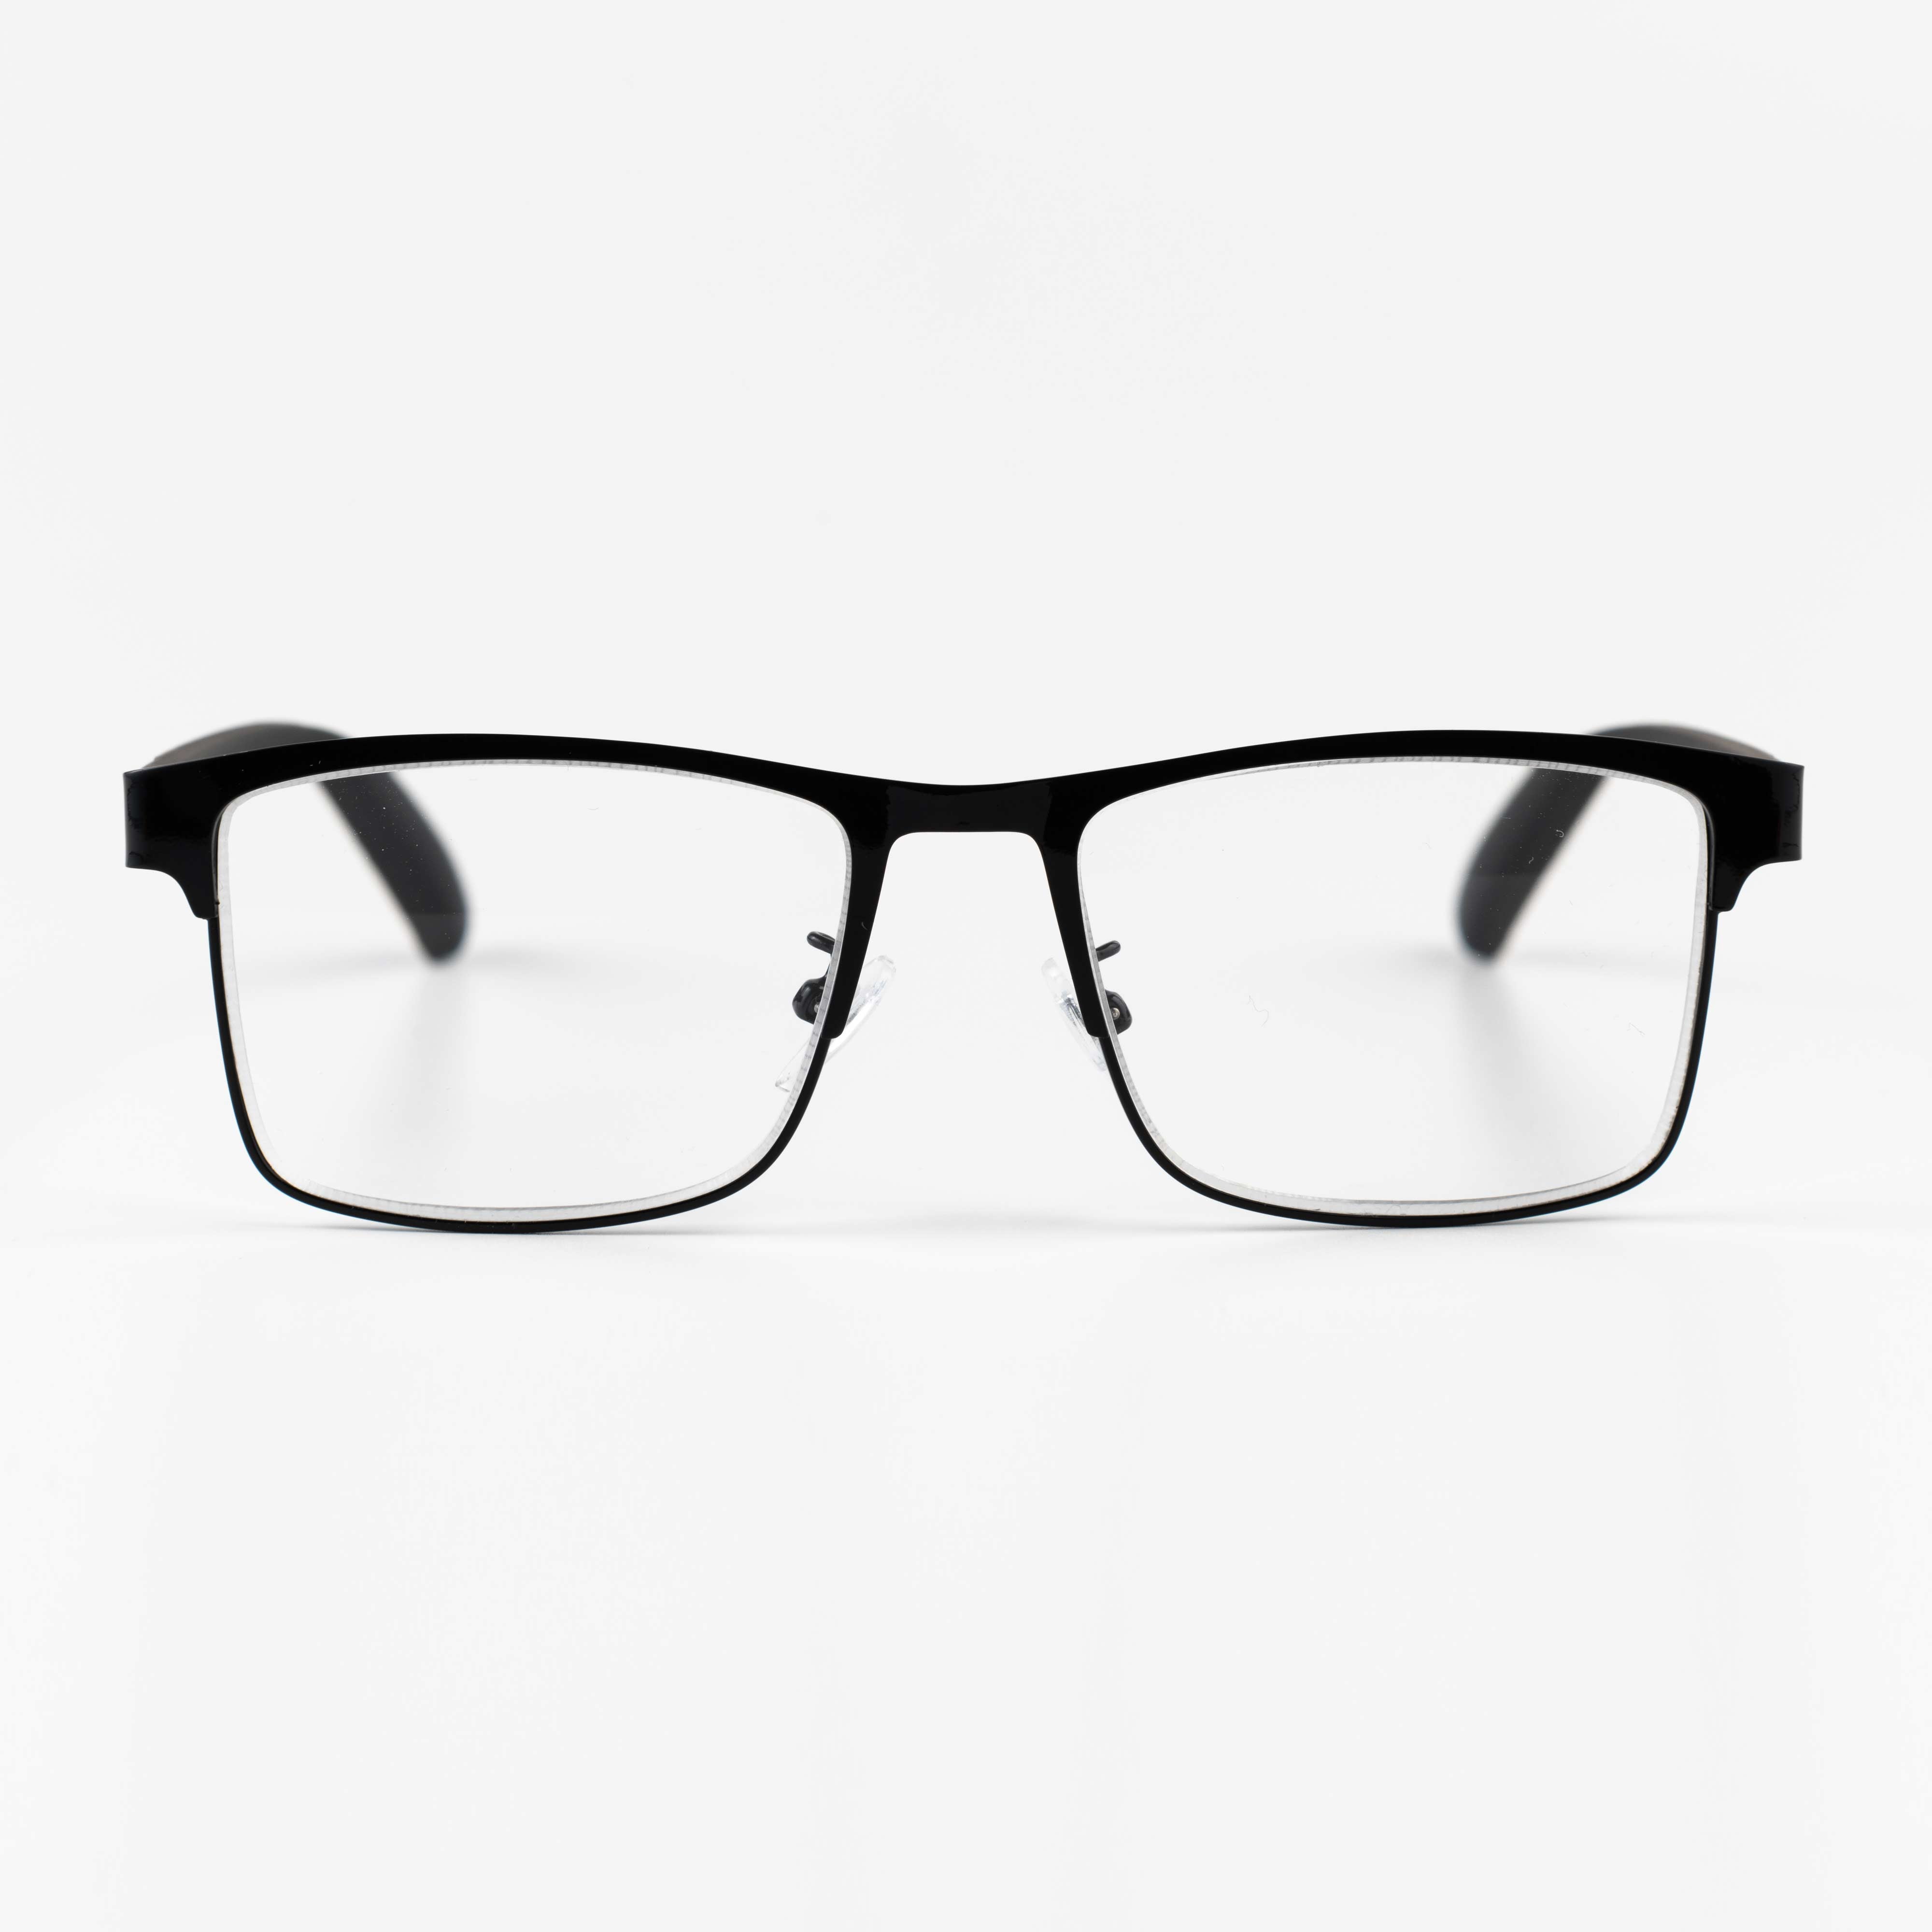 Thin branch black square reading glasses